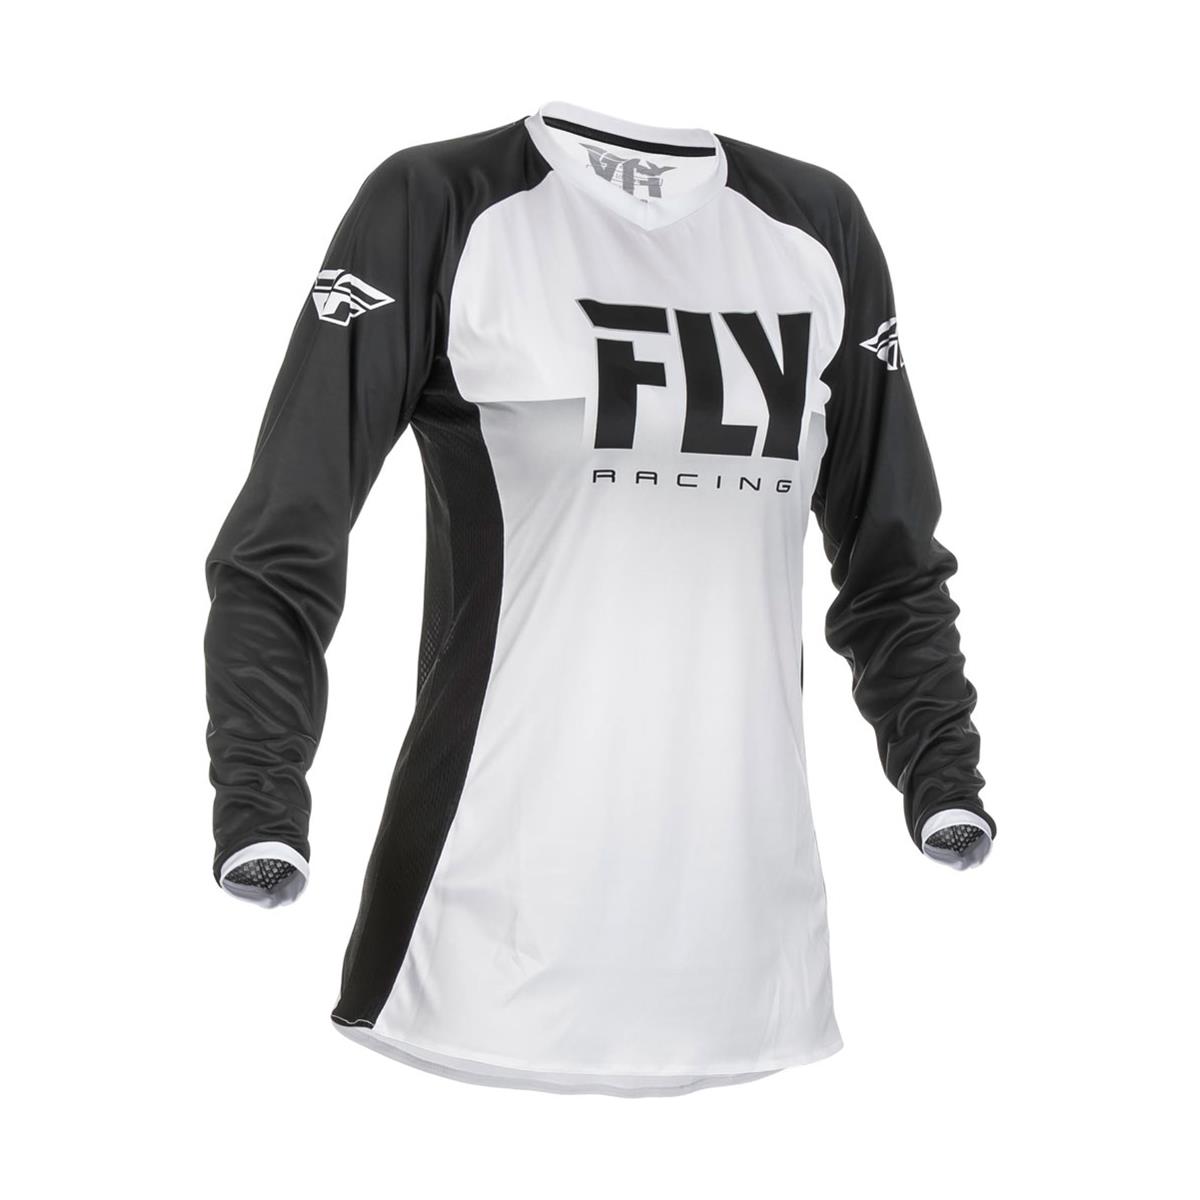 Fly Racing Girls Jersey Lite White/Black